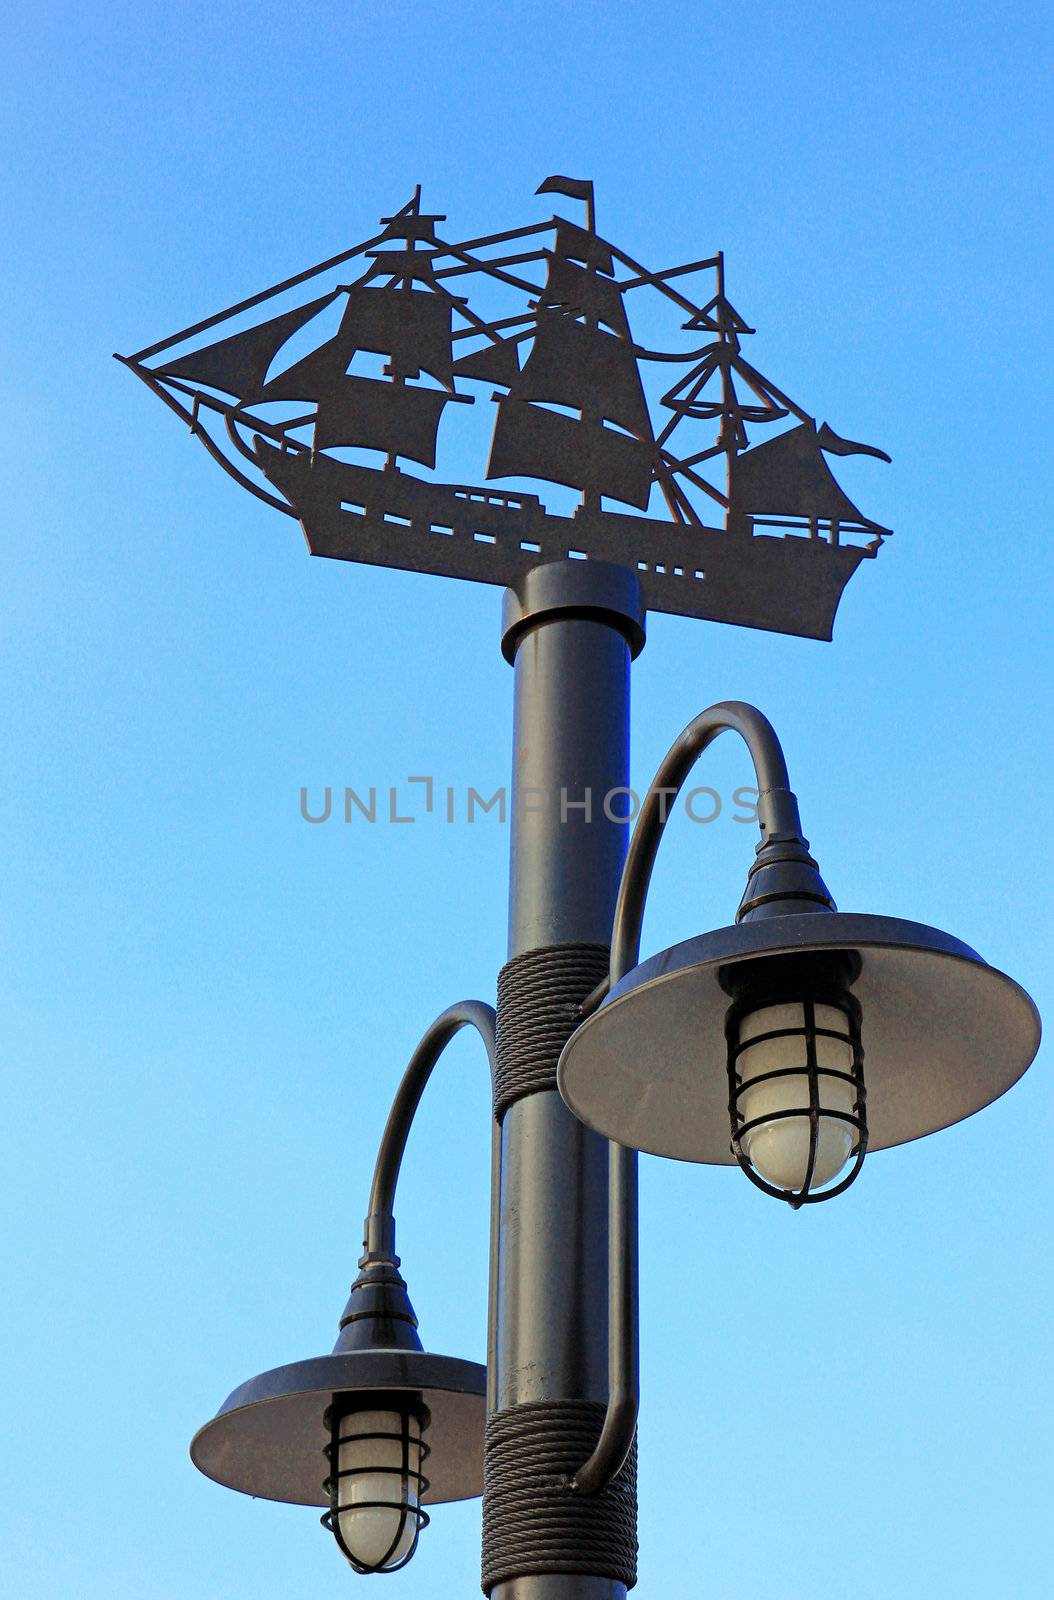 Decorative street lamp-post on blue sky